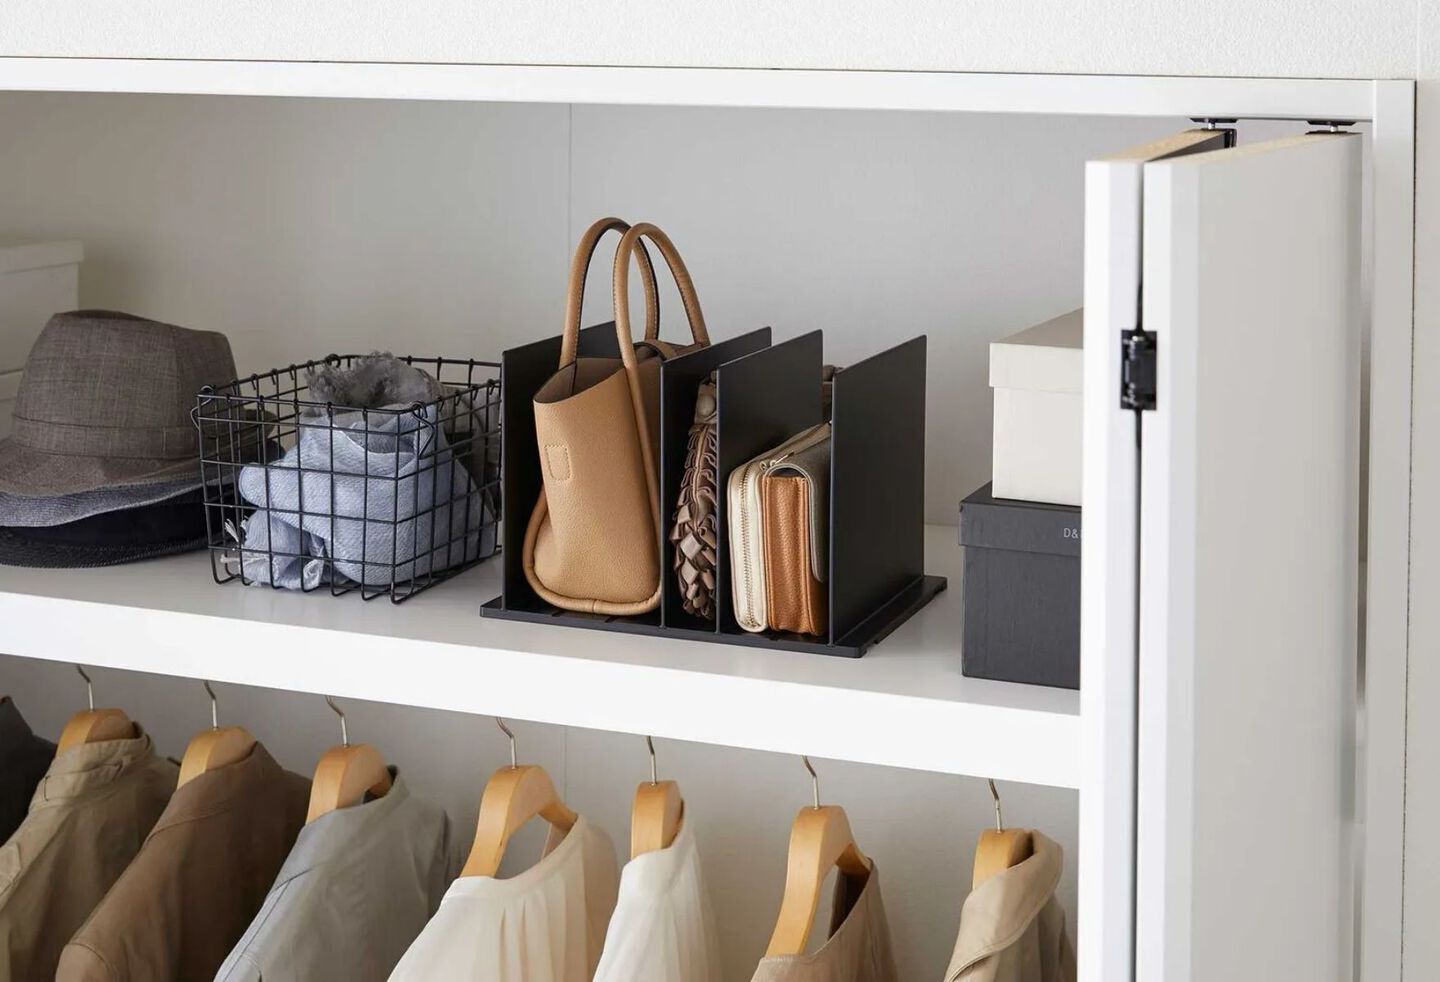 Closet shelf with a black purse organizer on top